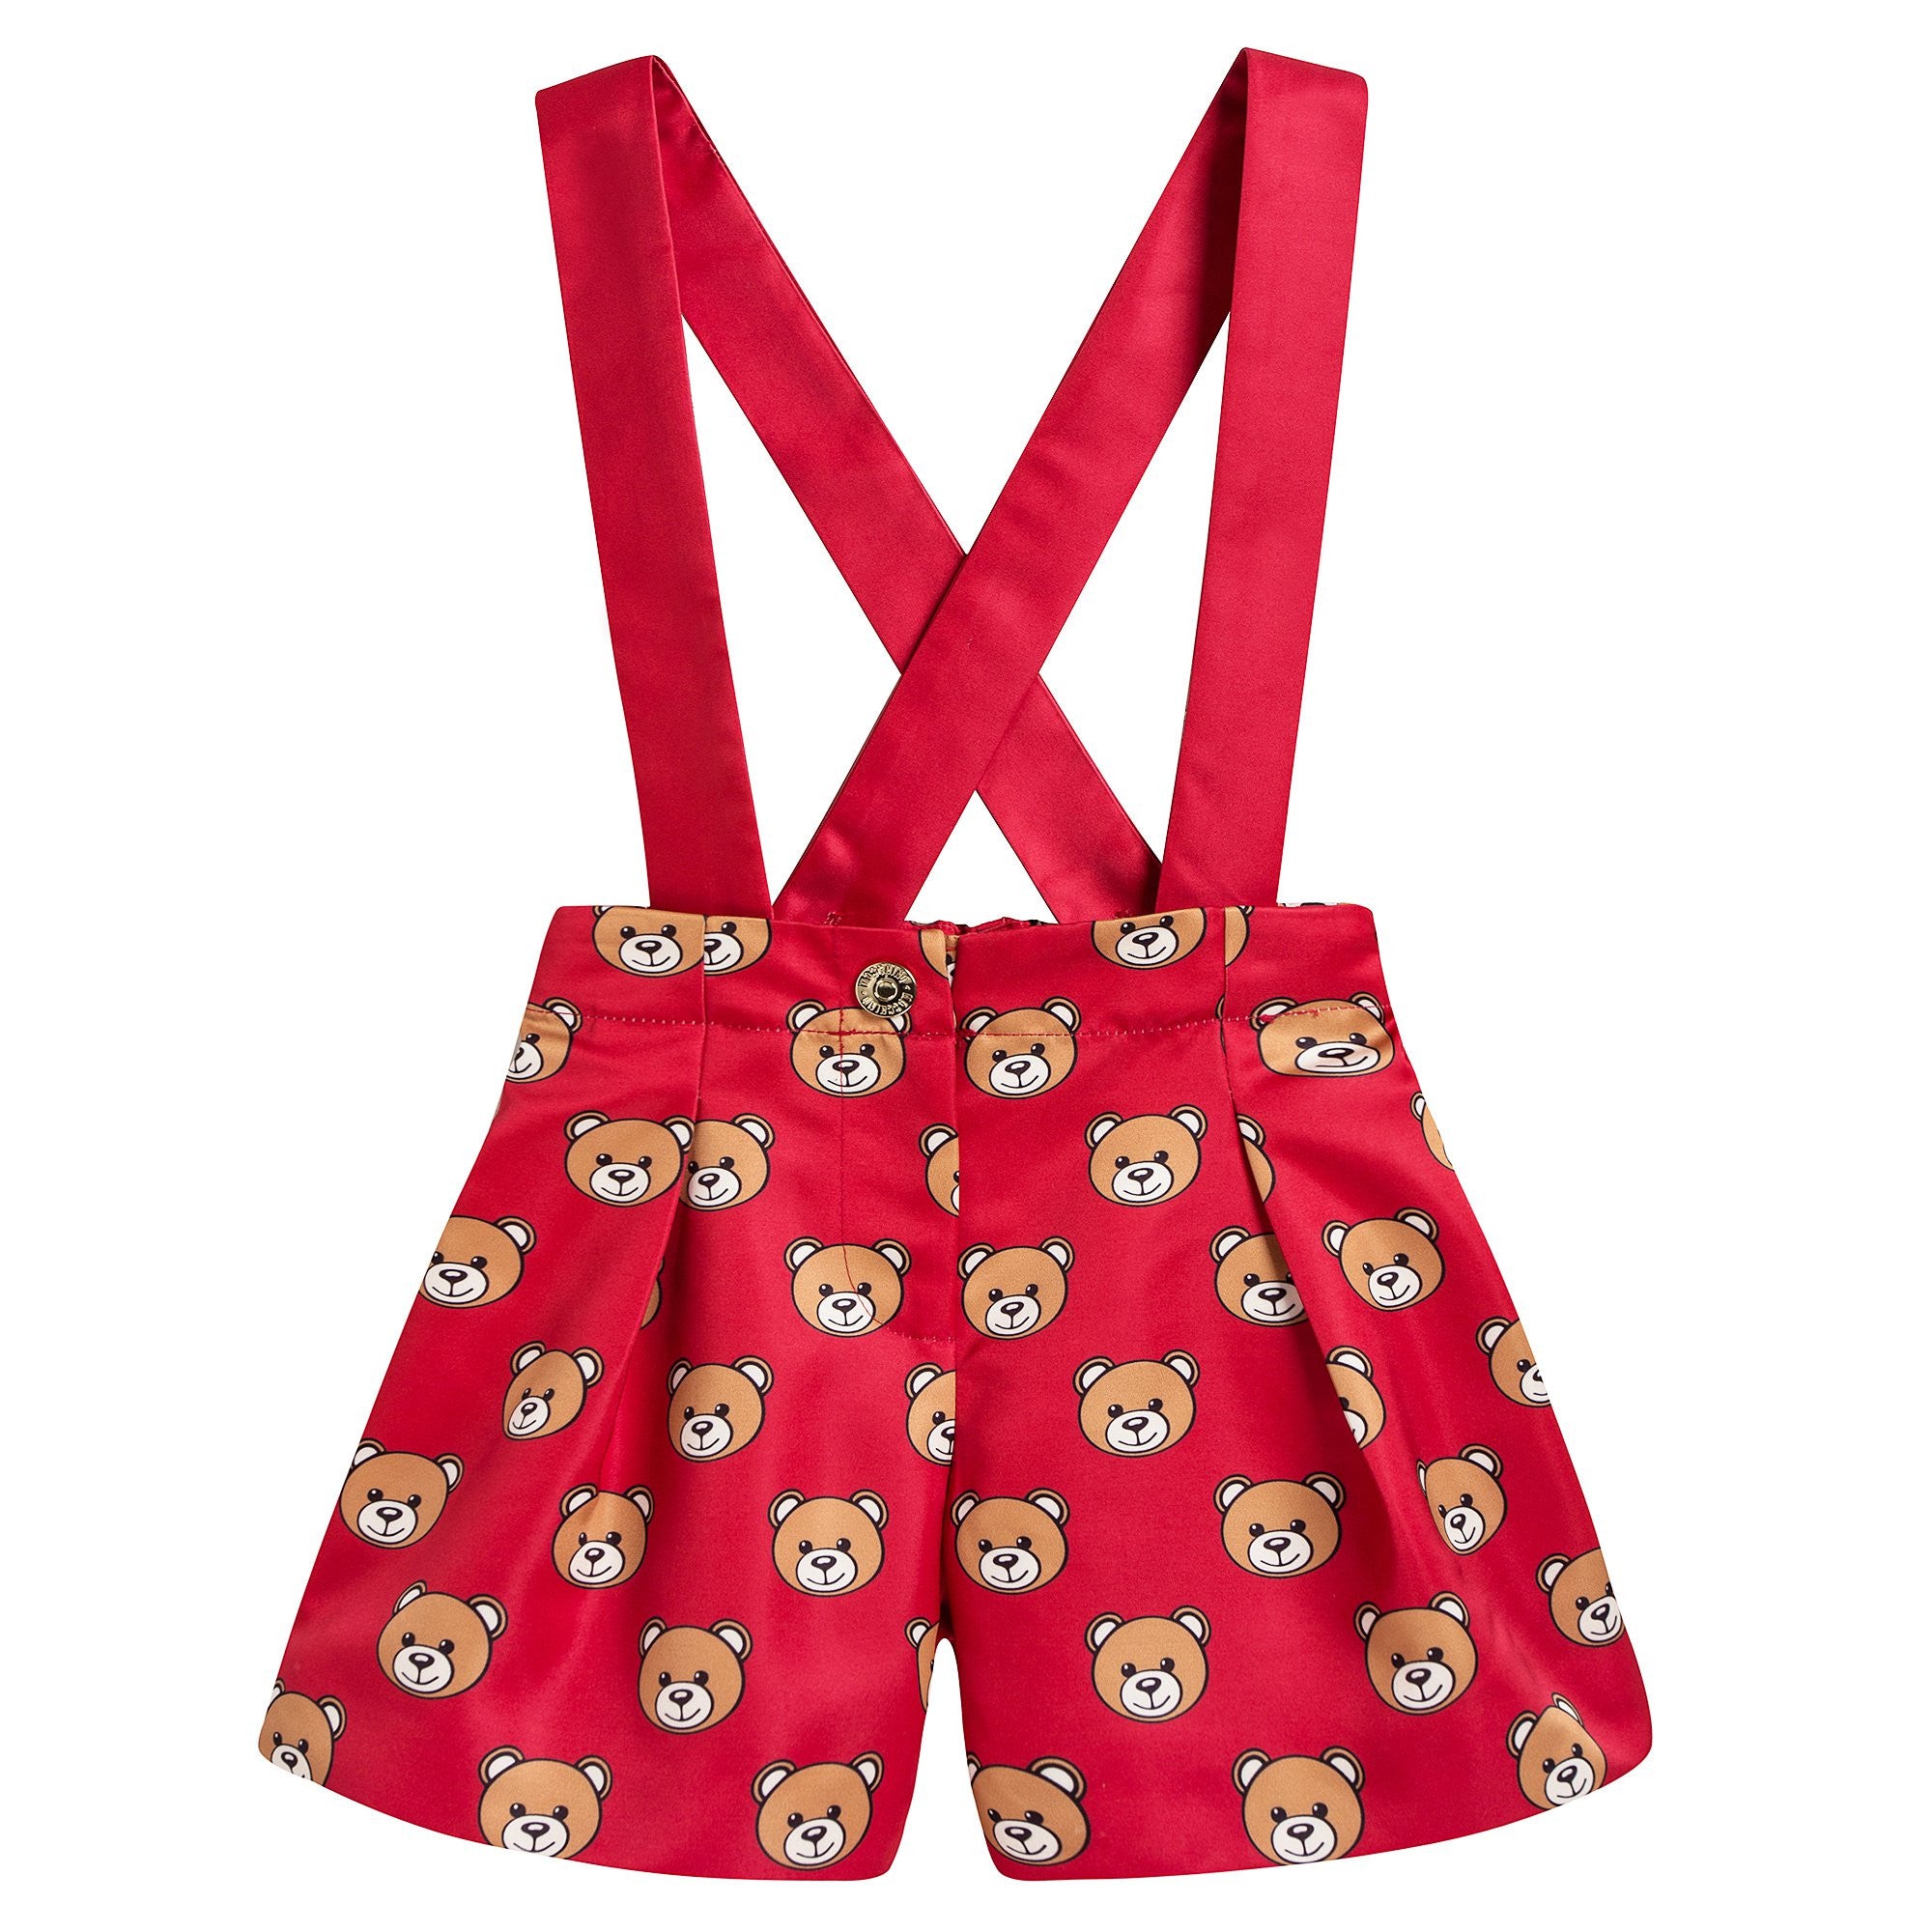 Girls Red Teddy Printed Shorts